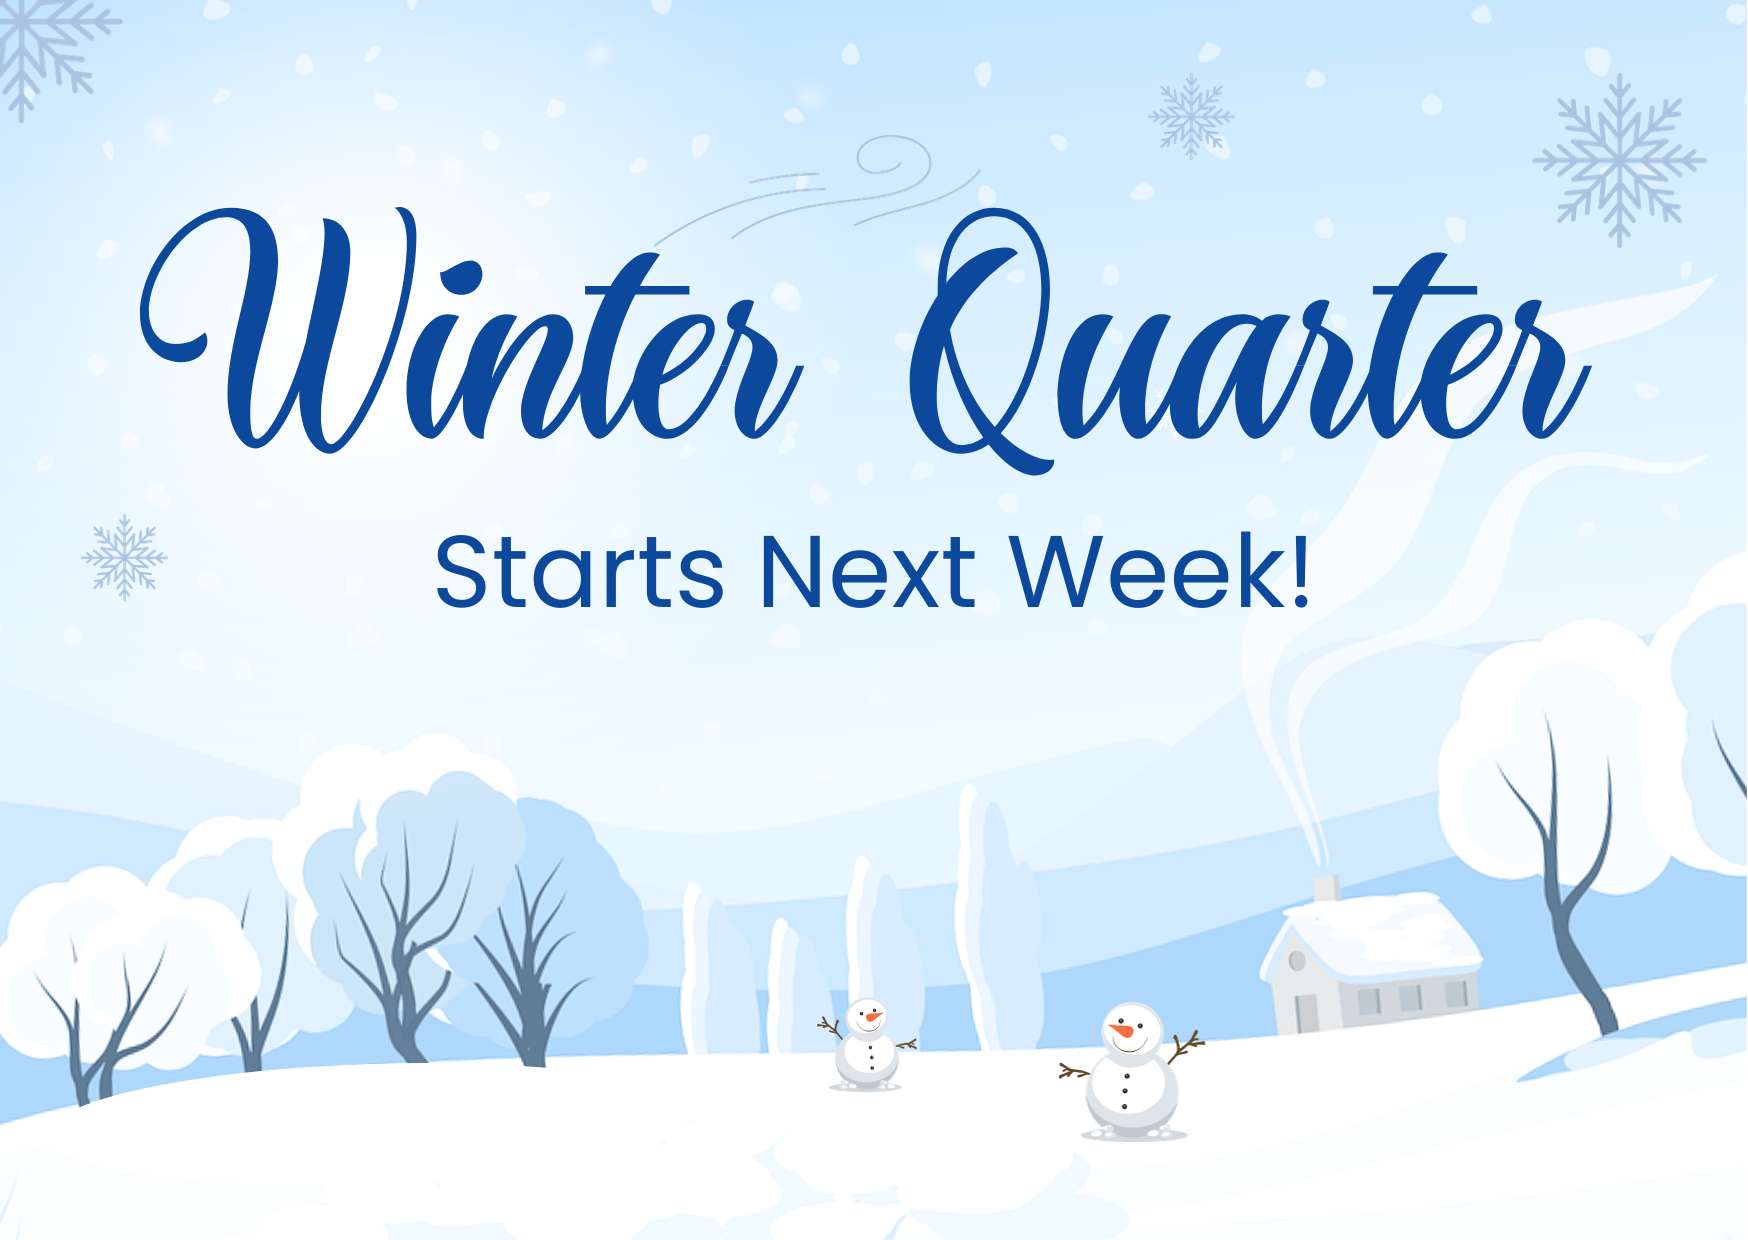 Winter Quarter Starts Next Week!